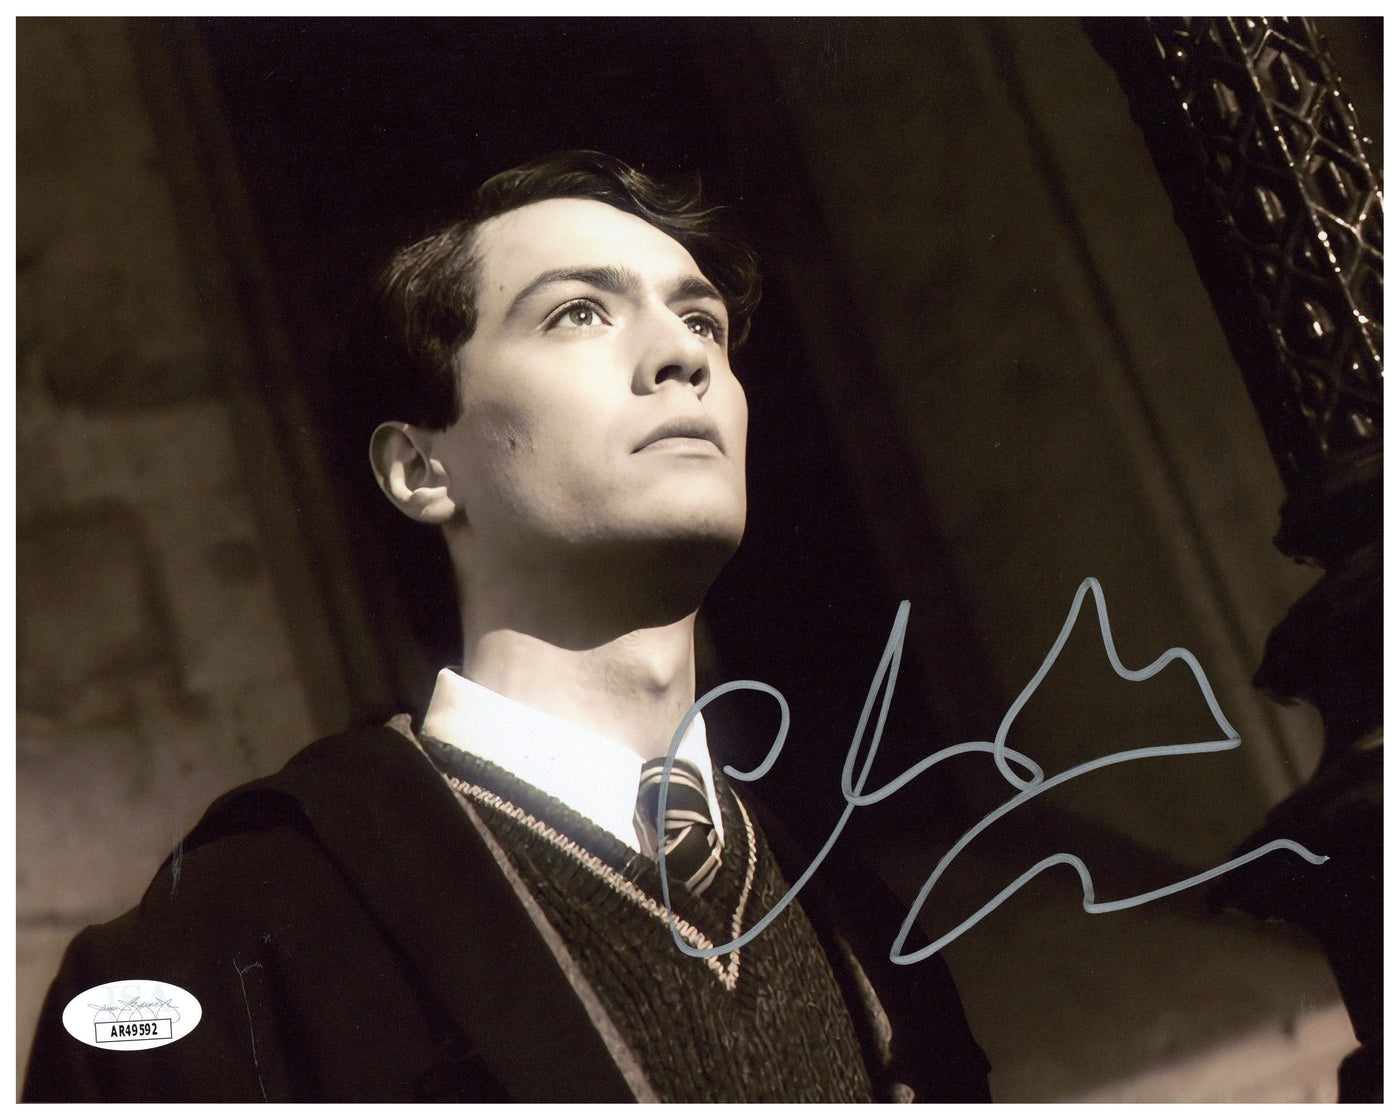 Christian Coulson Signed 8x10 Photo Harry Potter Autograph JSA COA #2